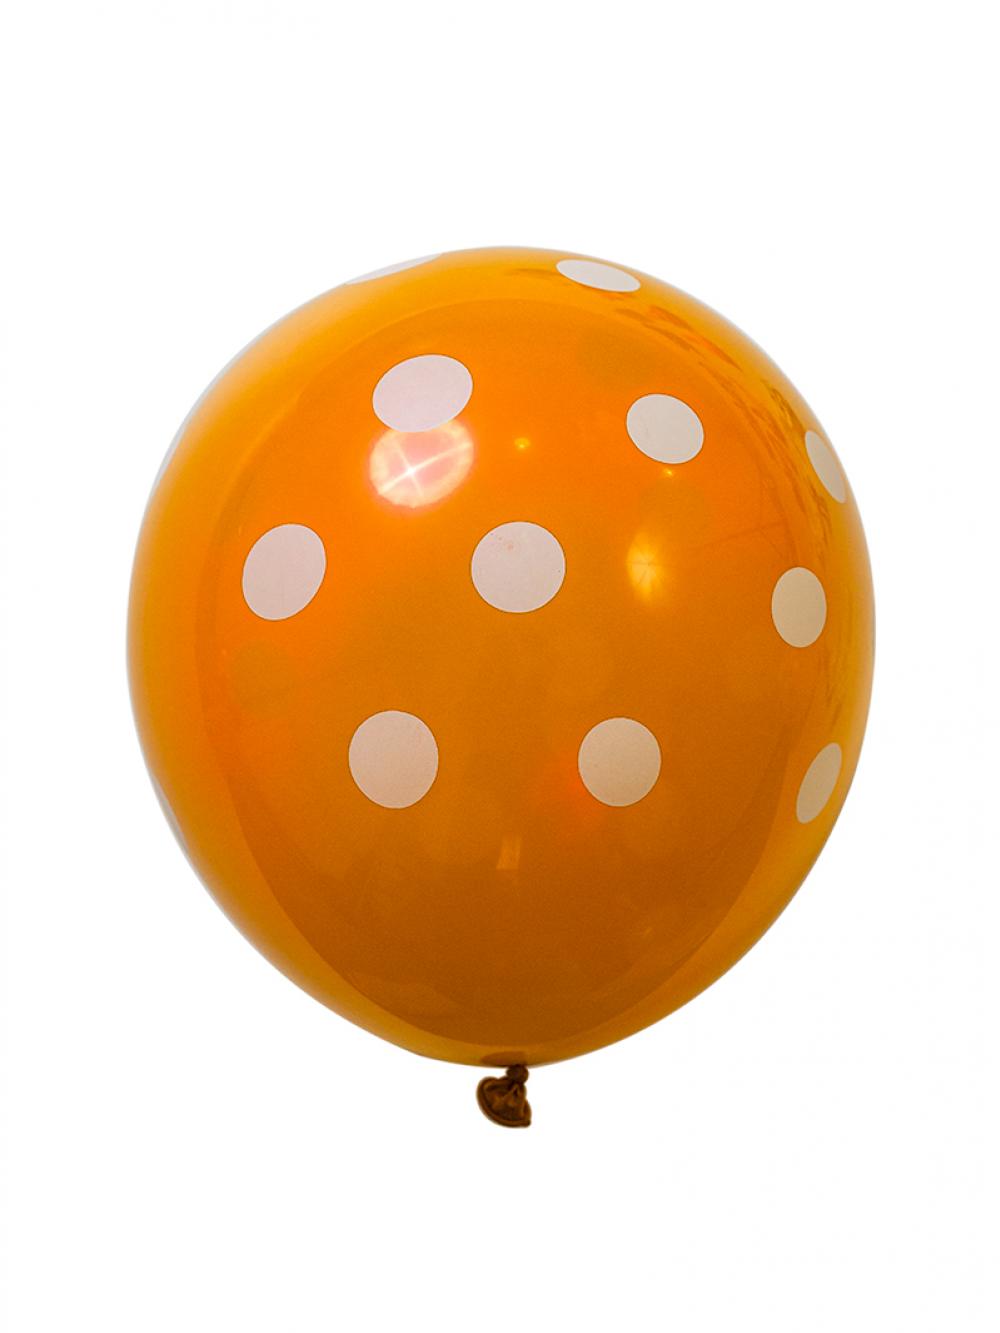 12 Inch Standard Polka Dot Balloons Orange Balloon White Dot  (10PCS)